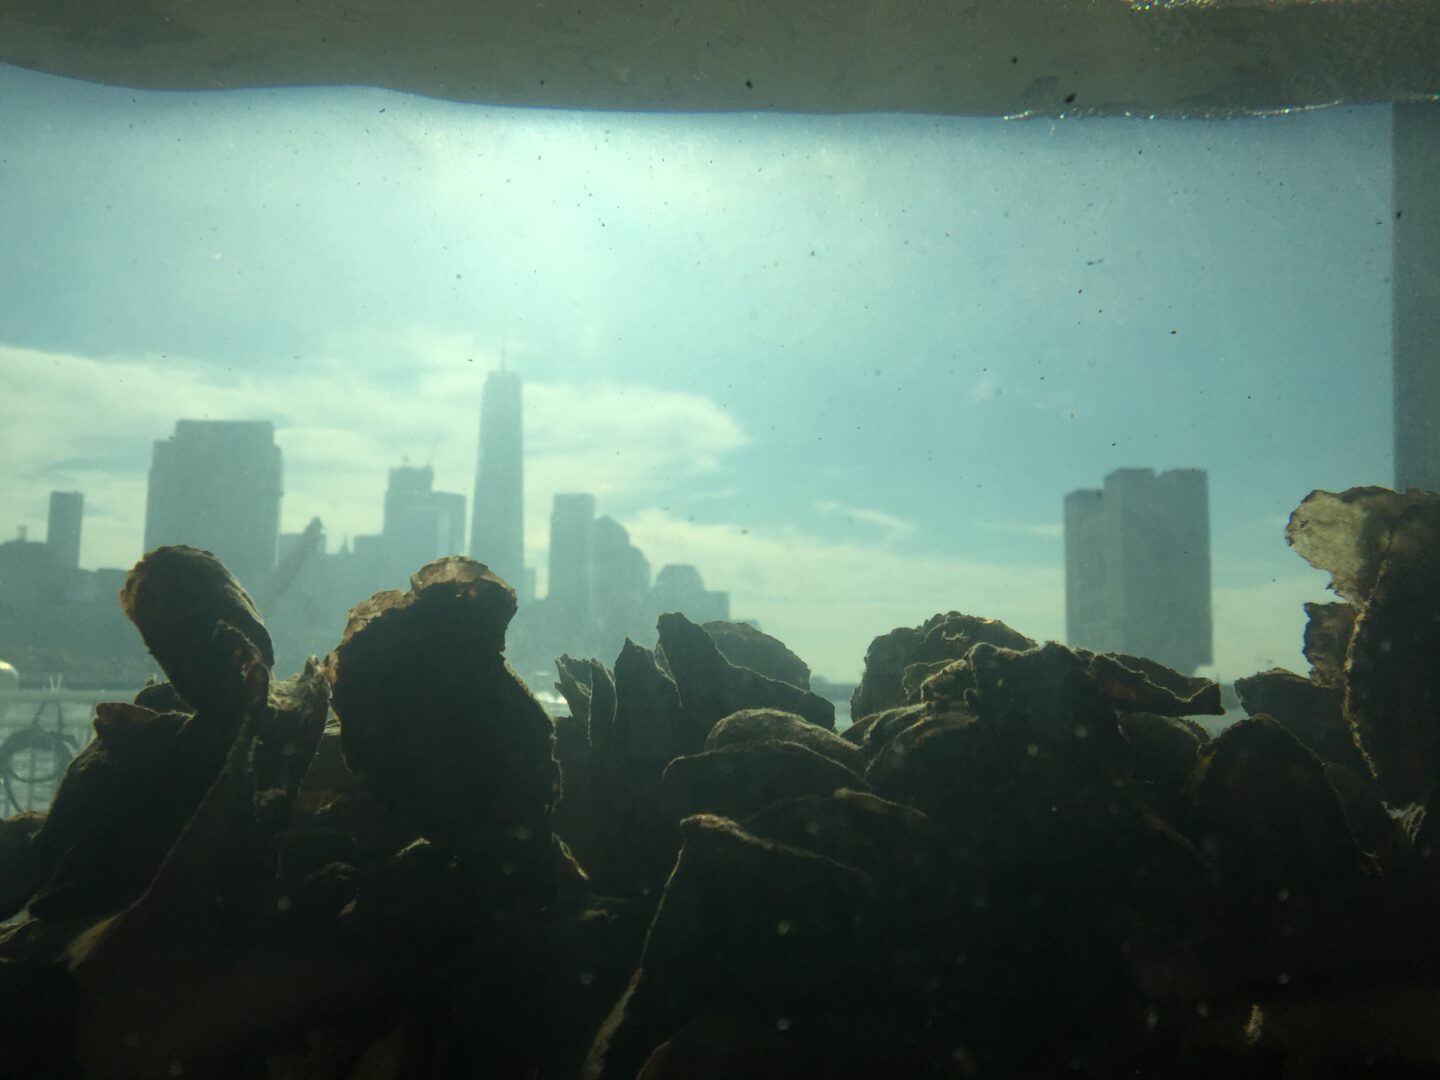 oyster in wetlab against city skyline at Hudson River Park